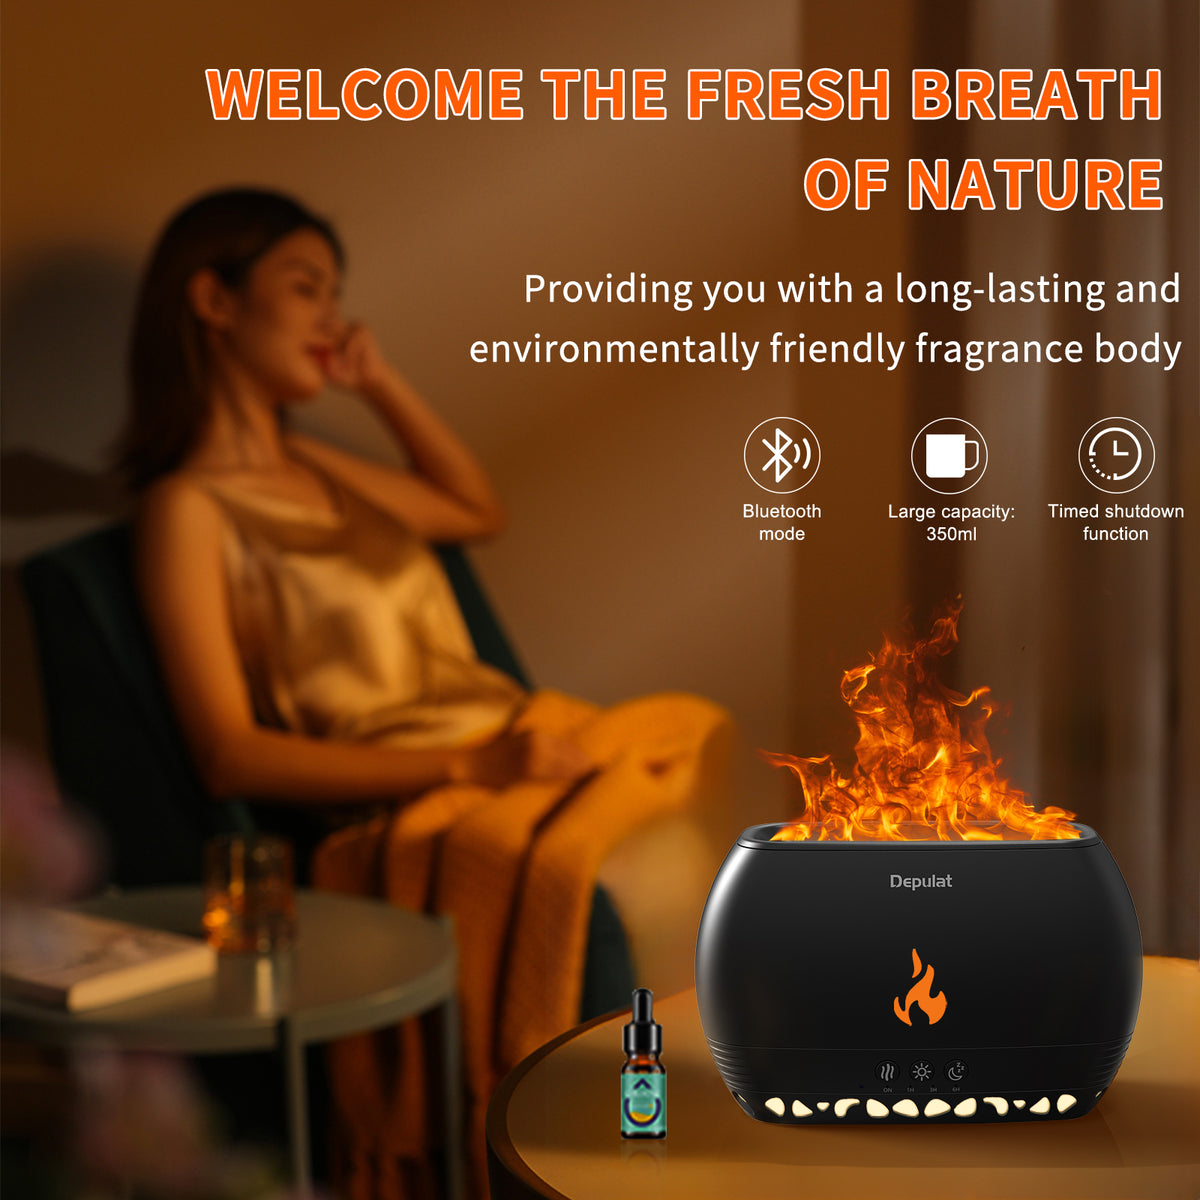 Depulat 350ml Sleep Aromatherapy Diffuser with White Noise, Bluetooth Speaker,7 Colors of Lights,3 Brightness Levels,11.83 FL.OZ.